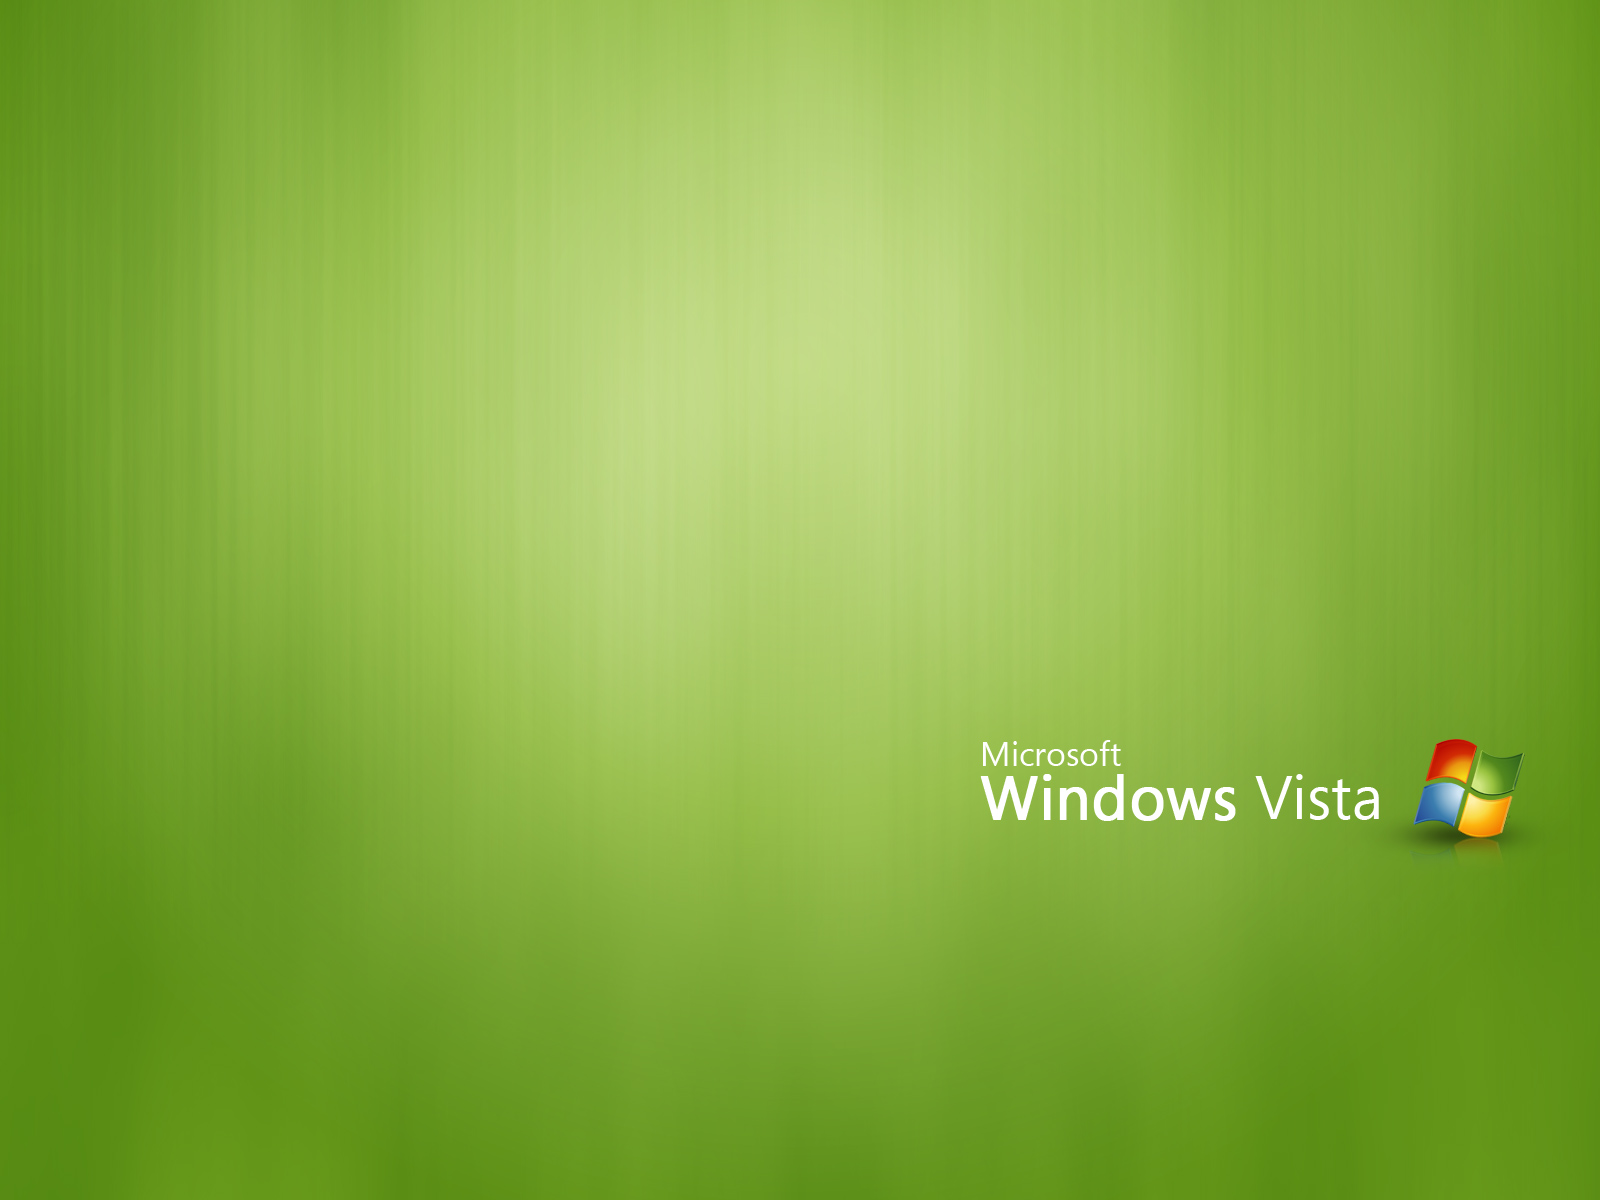 Windows Vista Lime Green Flat Wallpaper Geekpedia